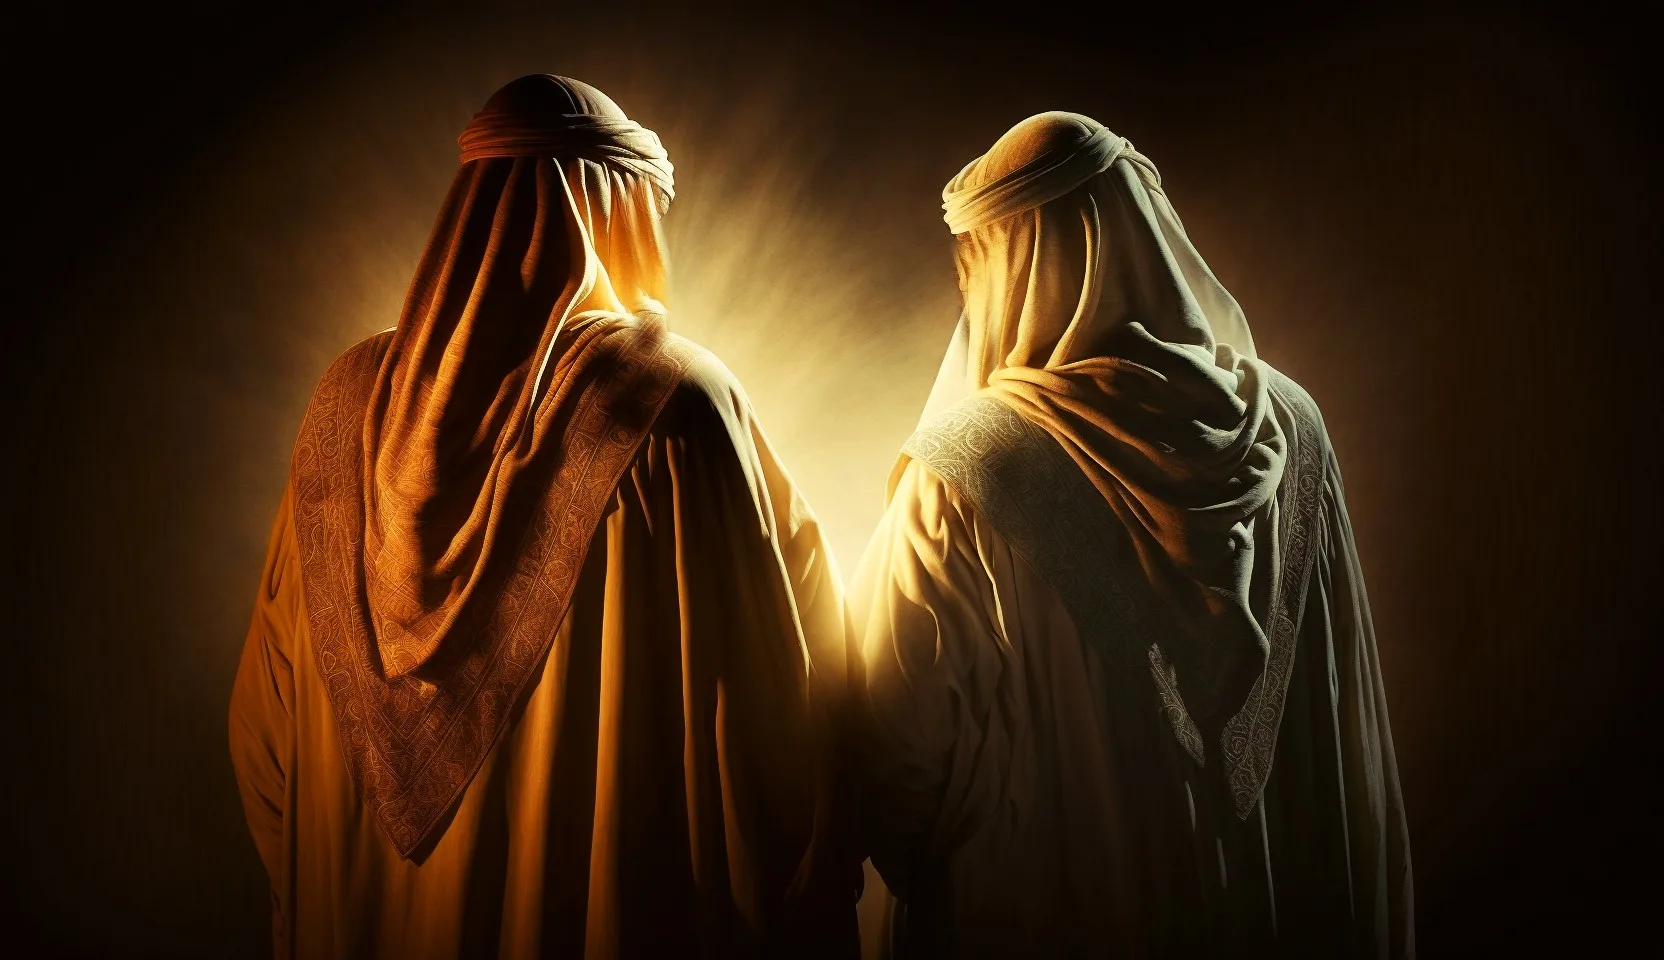 Ali ibn Abi Talib: The Spiritual Sibling to the Messenger of Allah